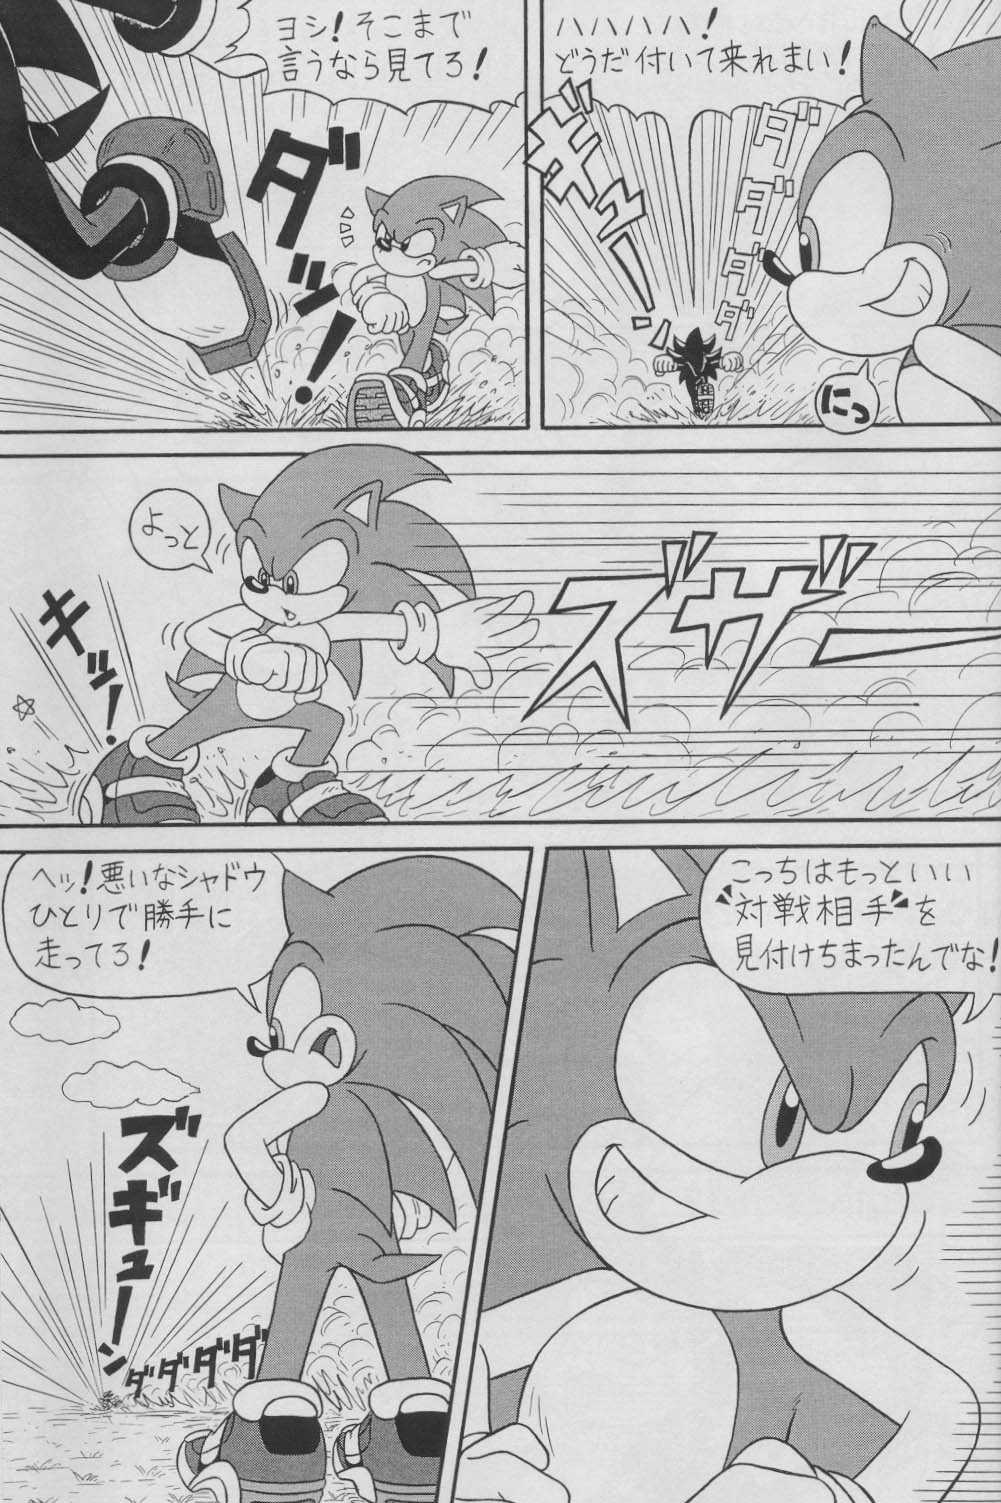 [Furry Bomb Factory] Furry Bomb #1 {Sonic} 